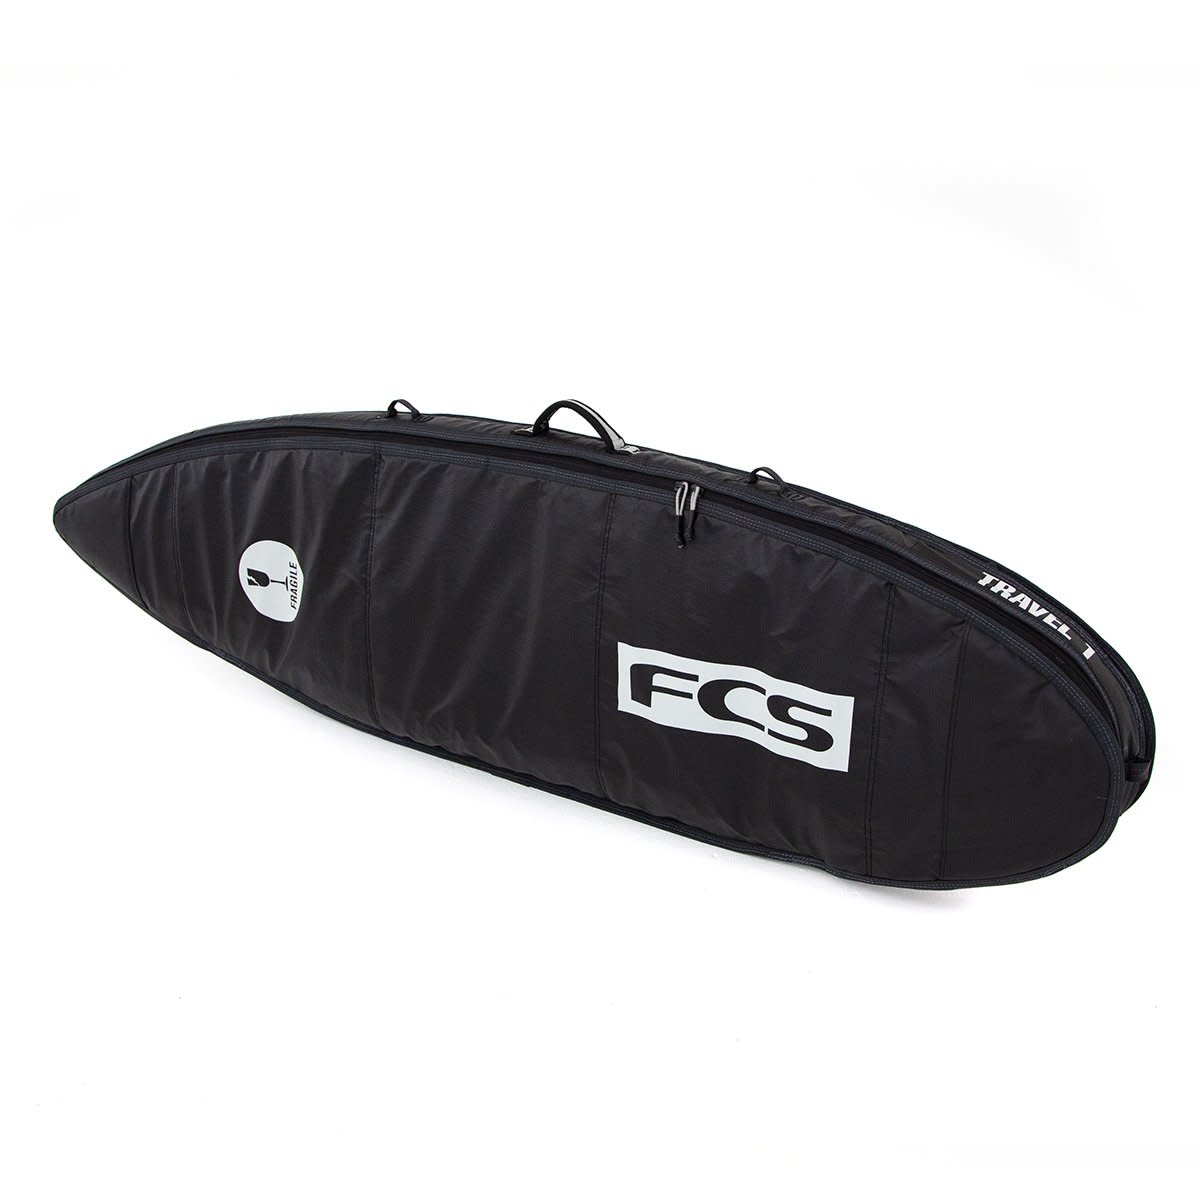 FCS Travel 1 All Purpose Boardbag Black-Grey 6ft7in